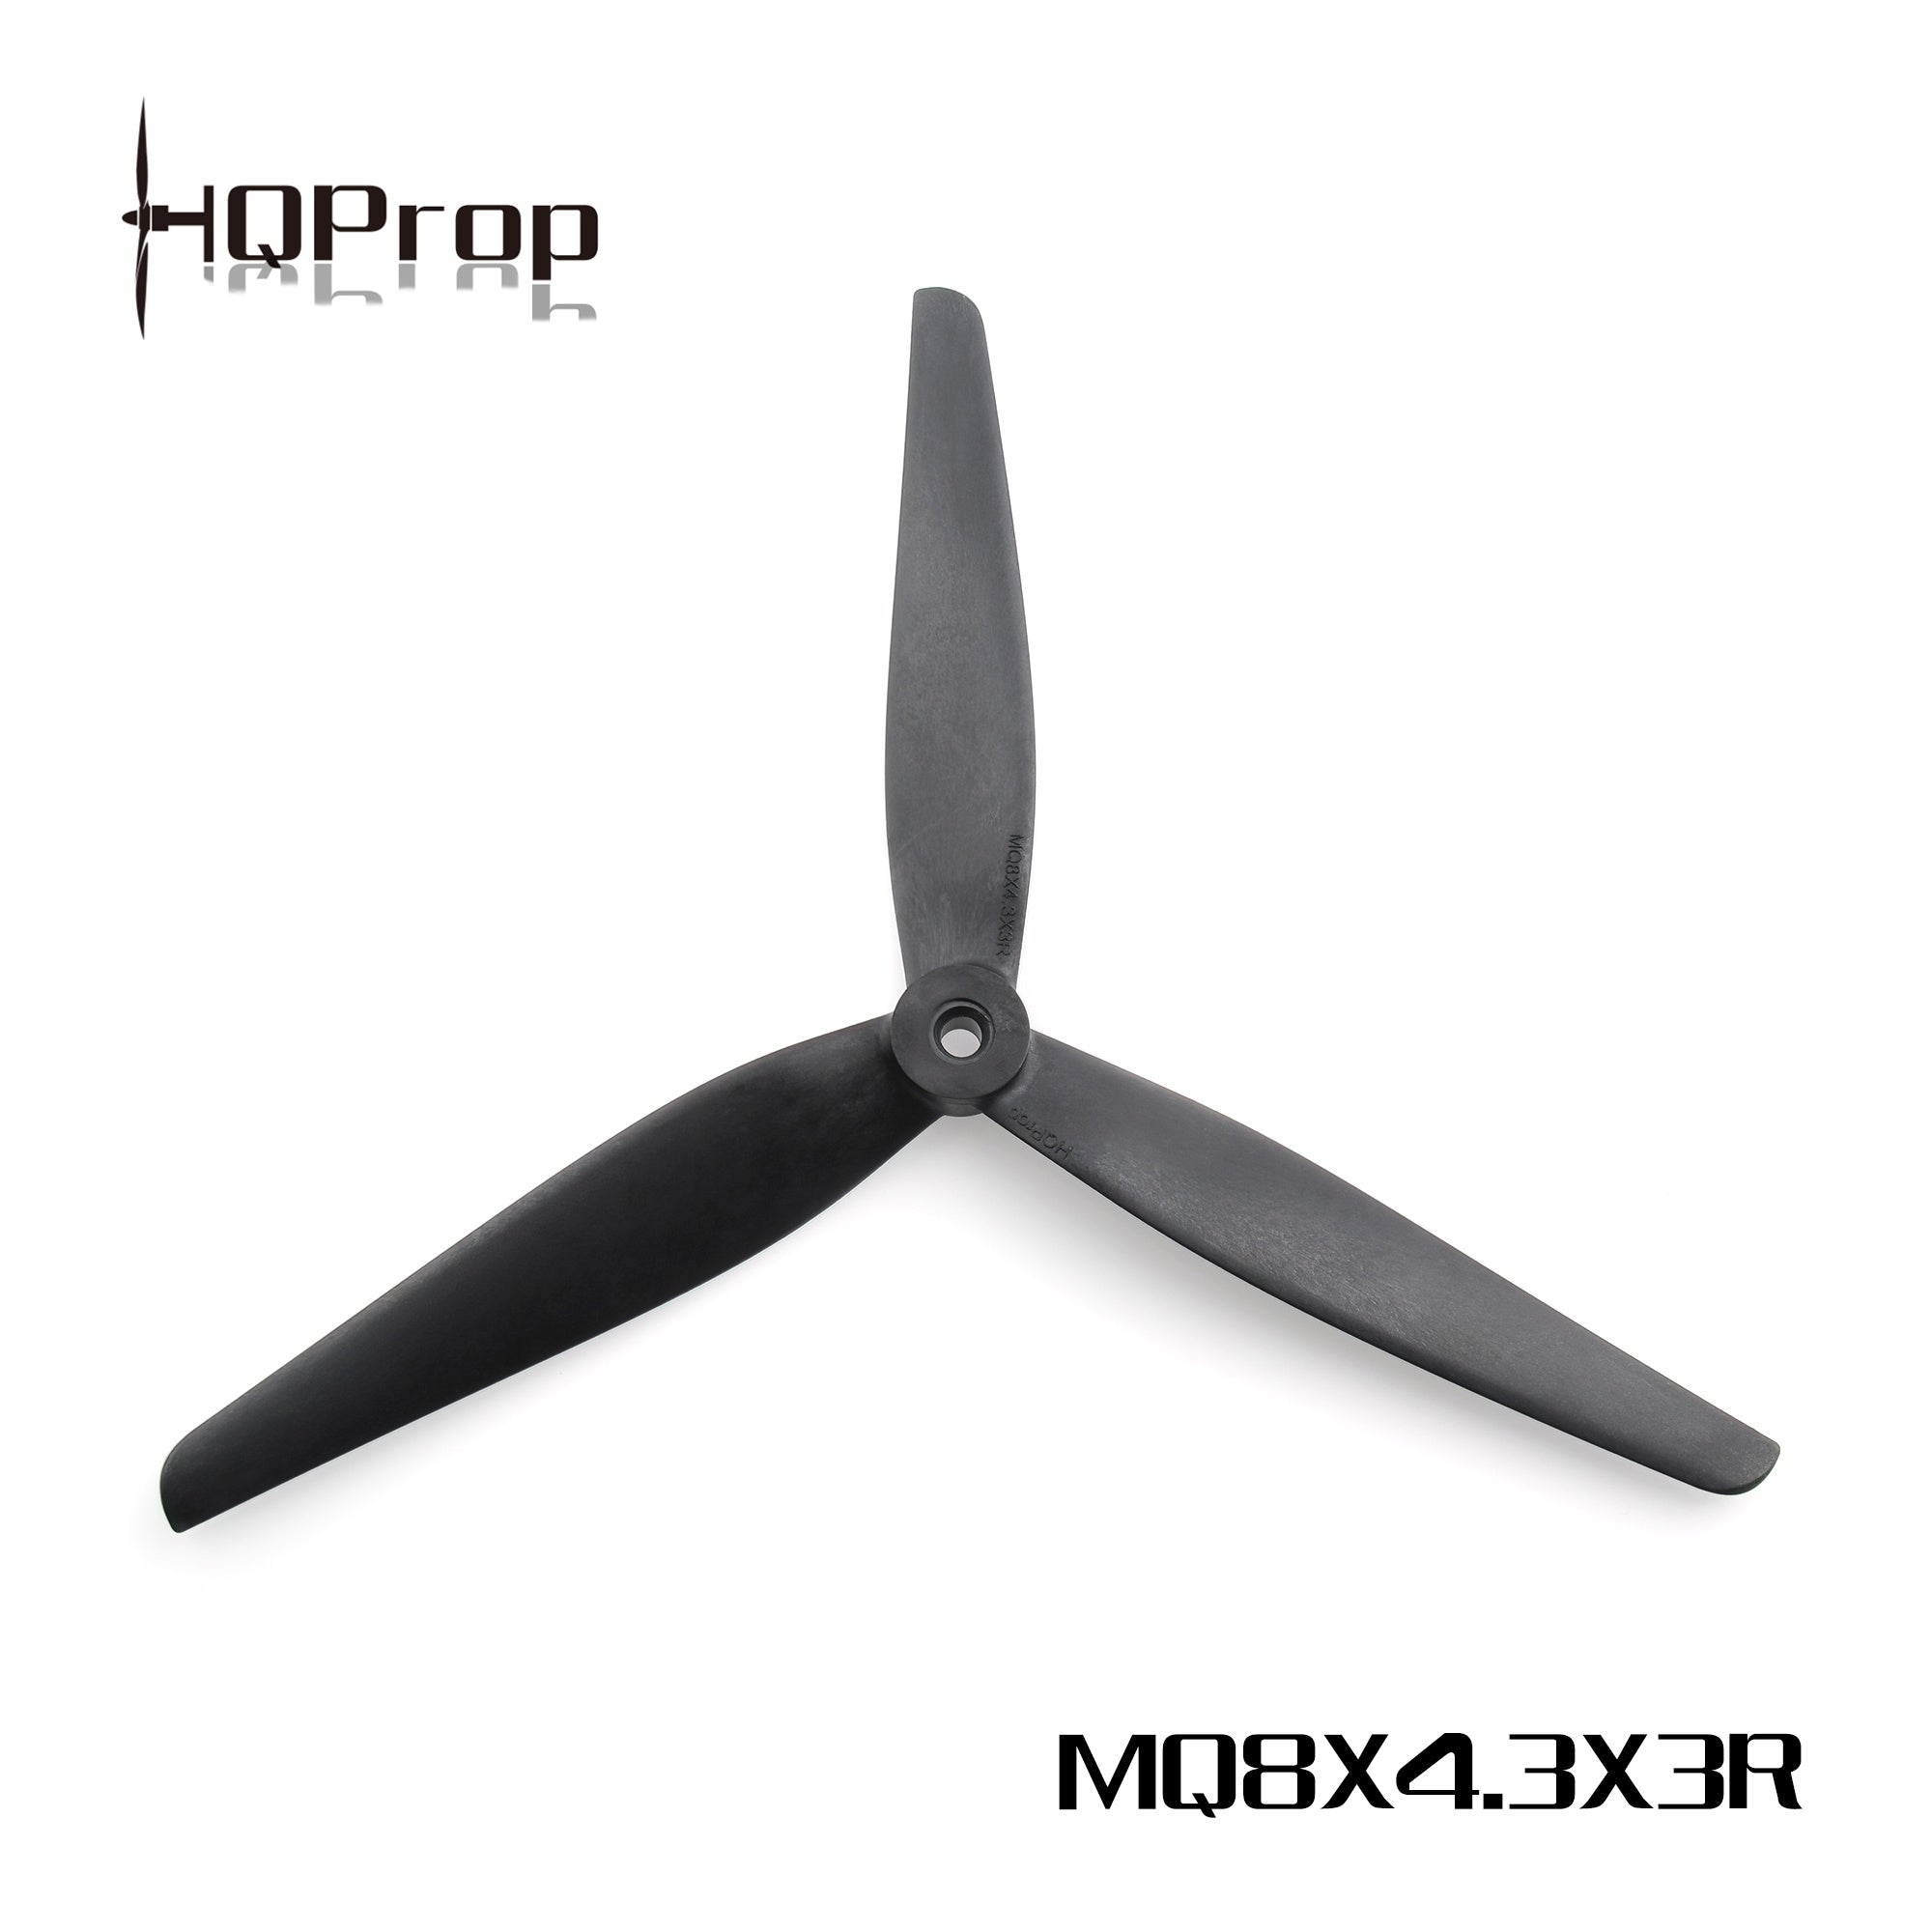 HQProp 8X4.3X3 MacroQuad Prop Black-Glass fiber Nylon Propellers (1pc)